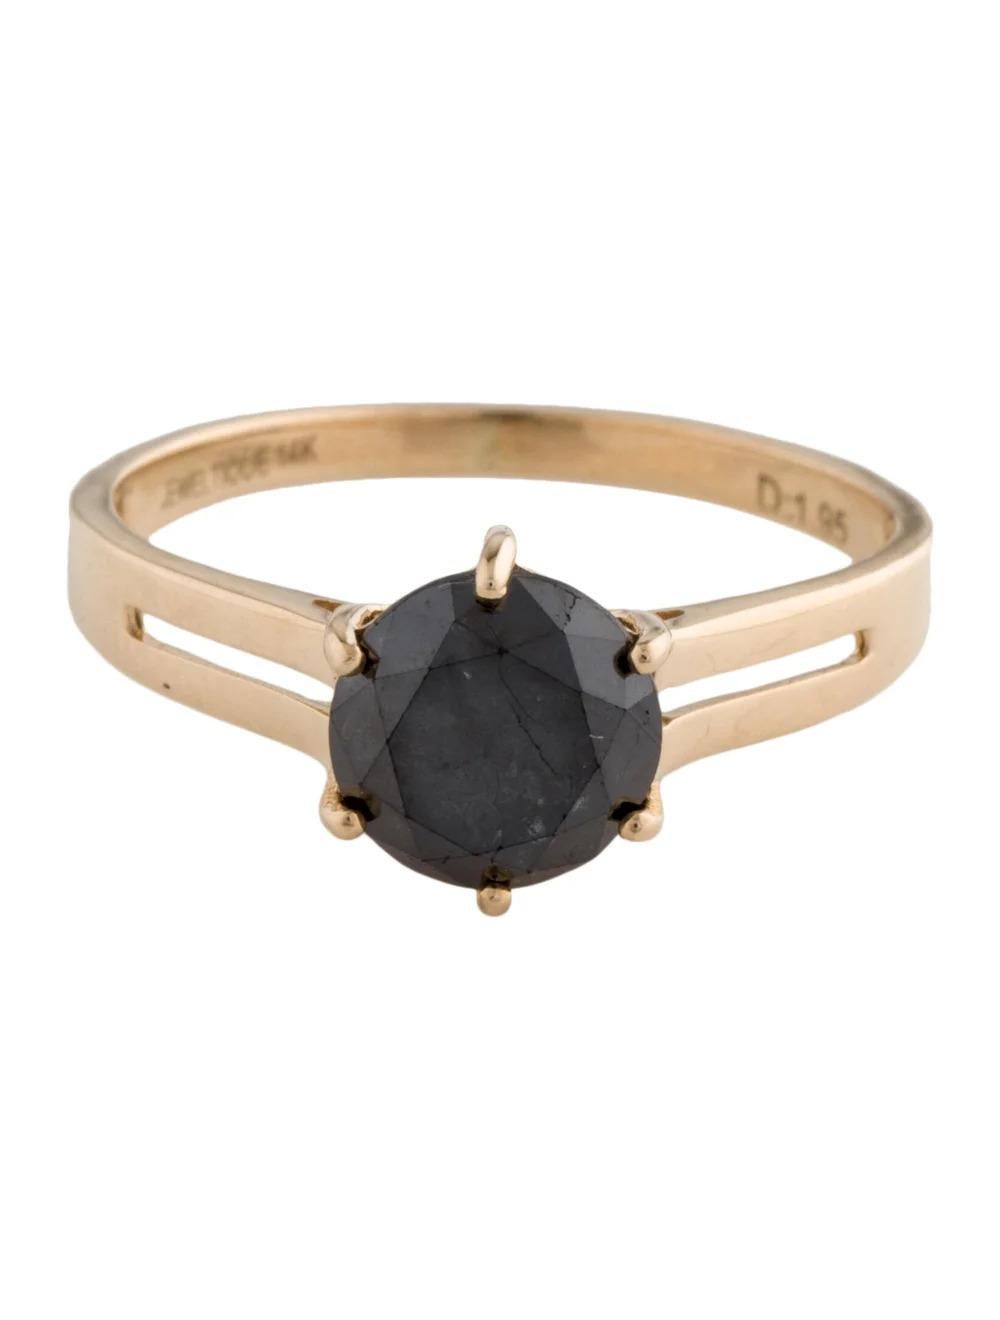 Round Cut 14K 1.75ctw Diamond Engagement Ring - Size 6.75 - Stunning Design, Luxury Piece For Sale